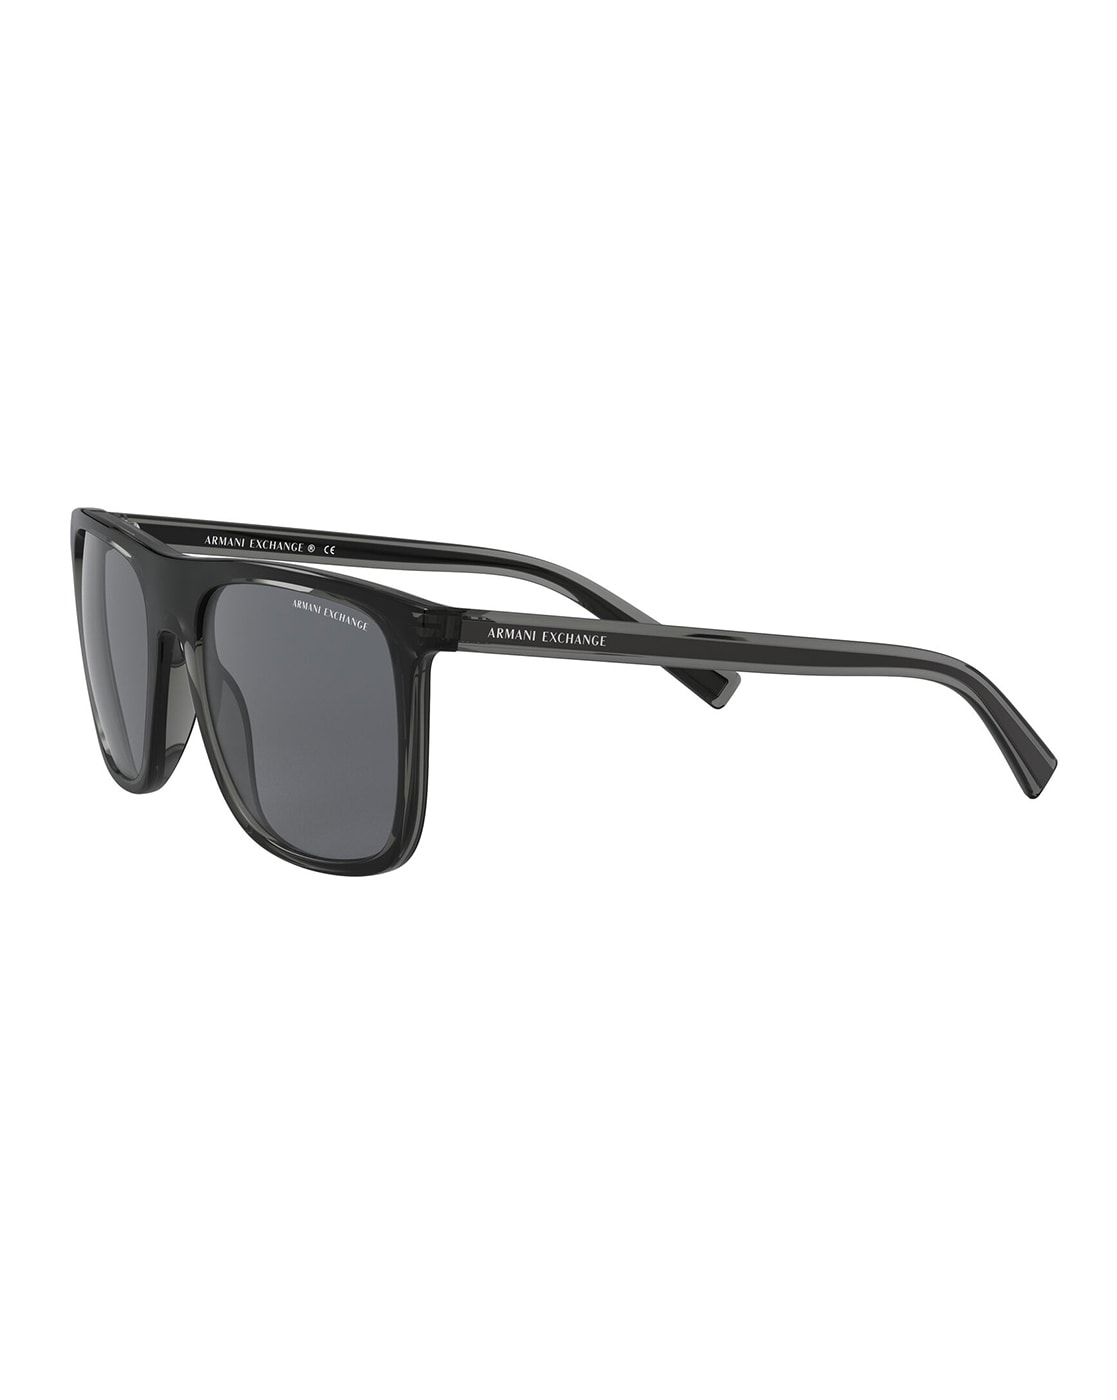 Aggregate more than 228 armani exchange sunglasses black super hot